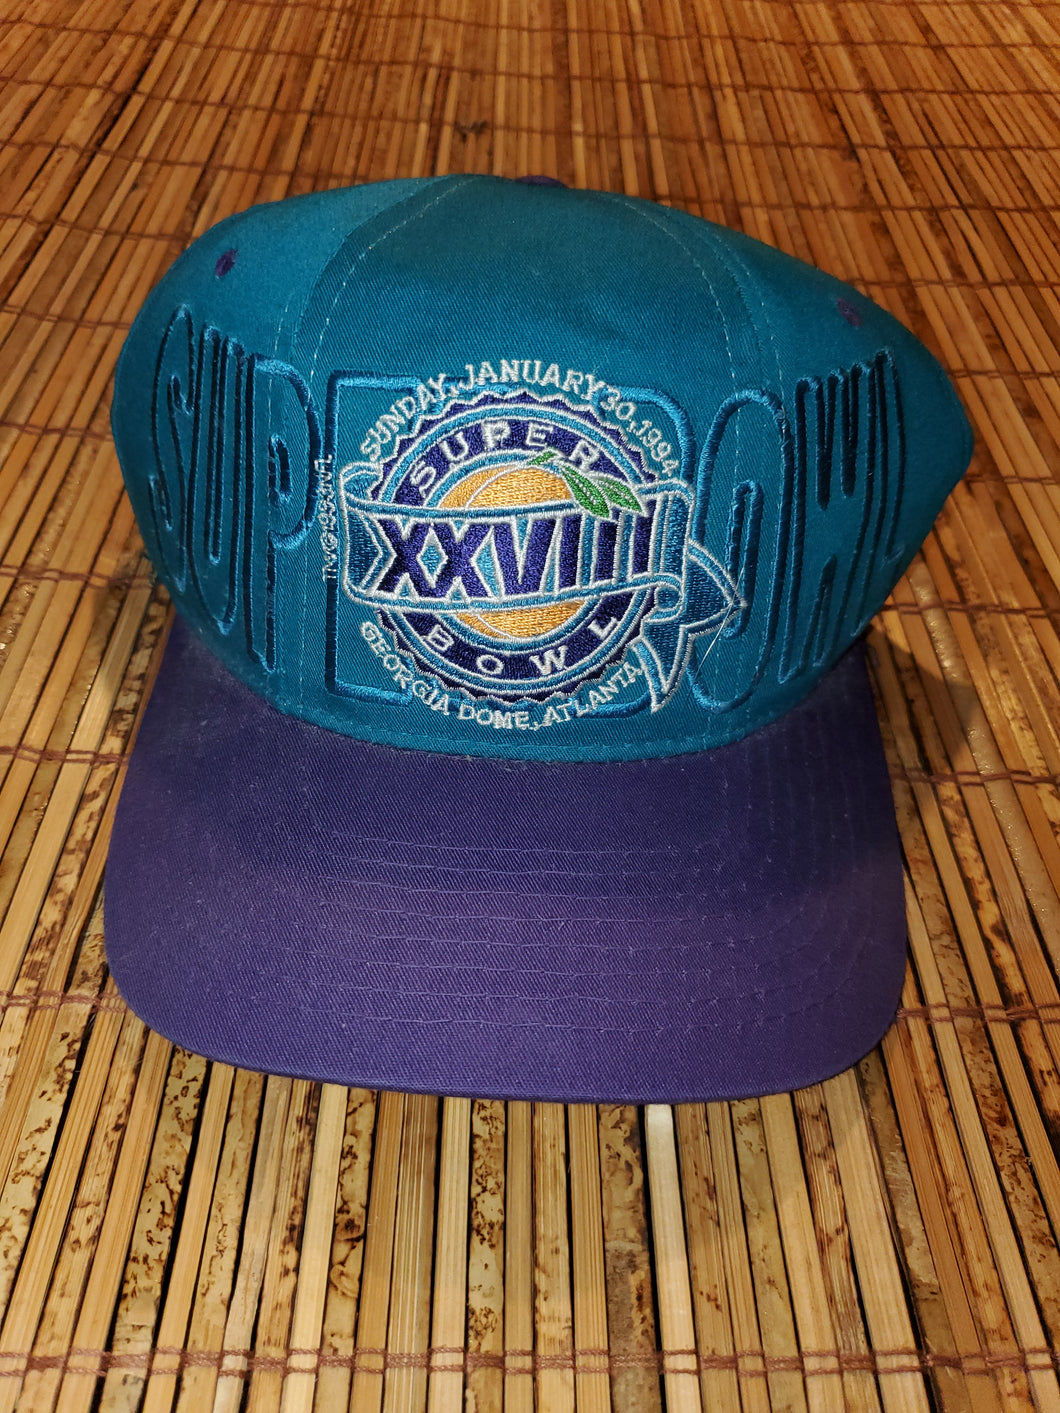 Vintage XXVIII Starter Superbowl Hat